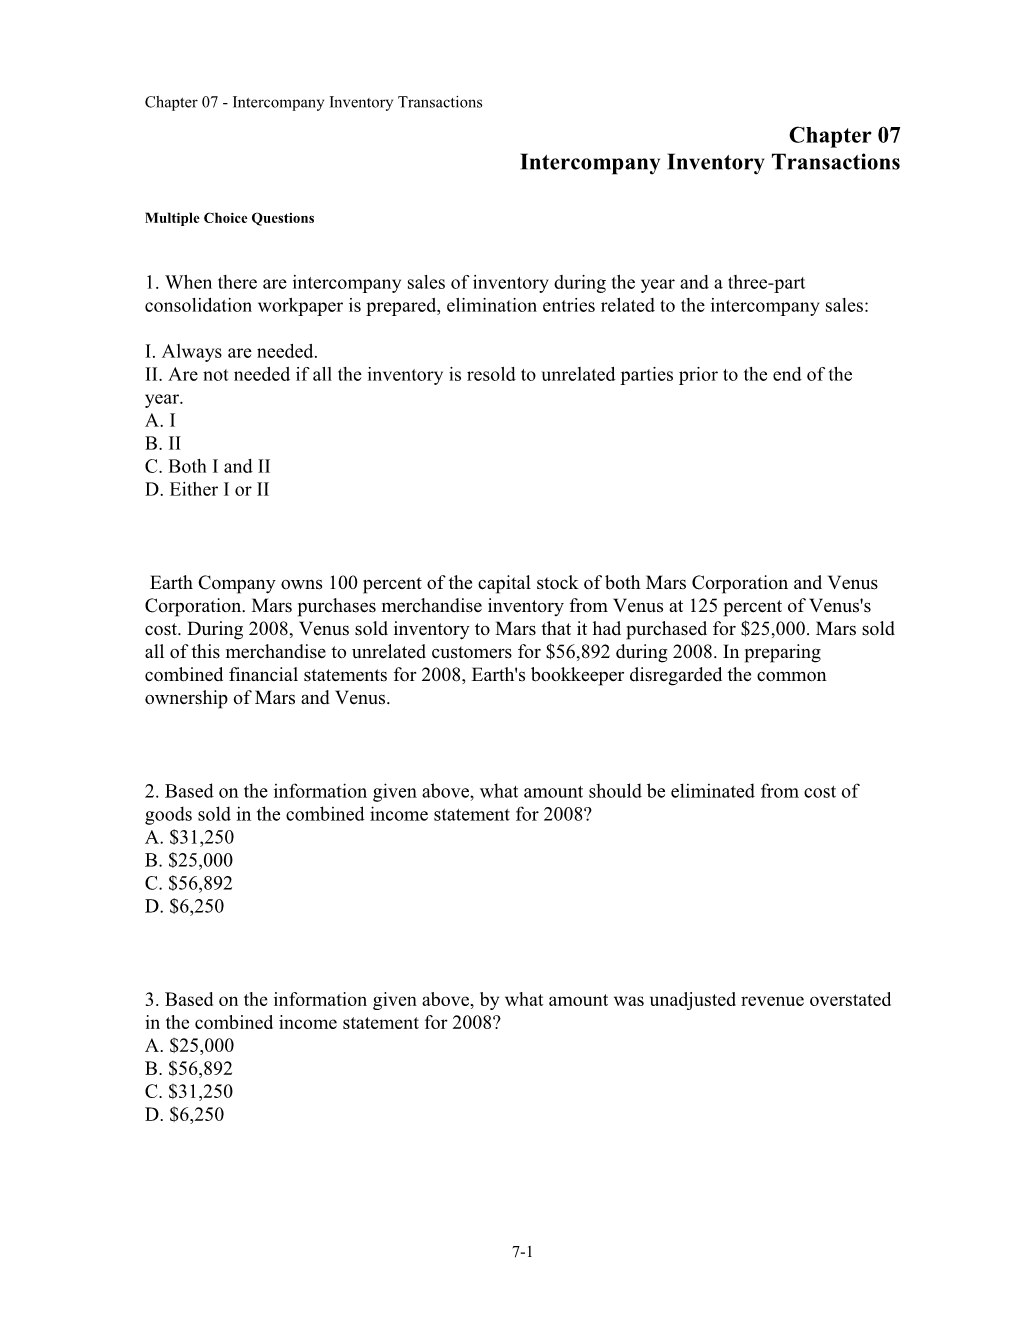 Chapter 07 Intercompany Inventory Transactions